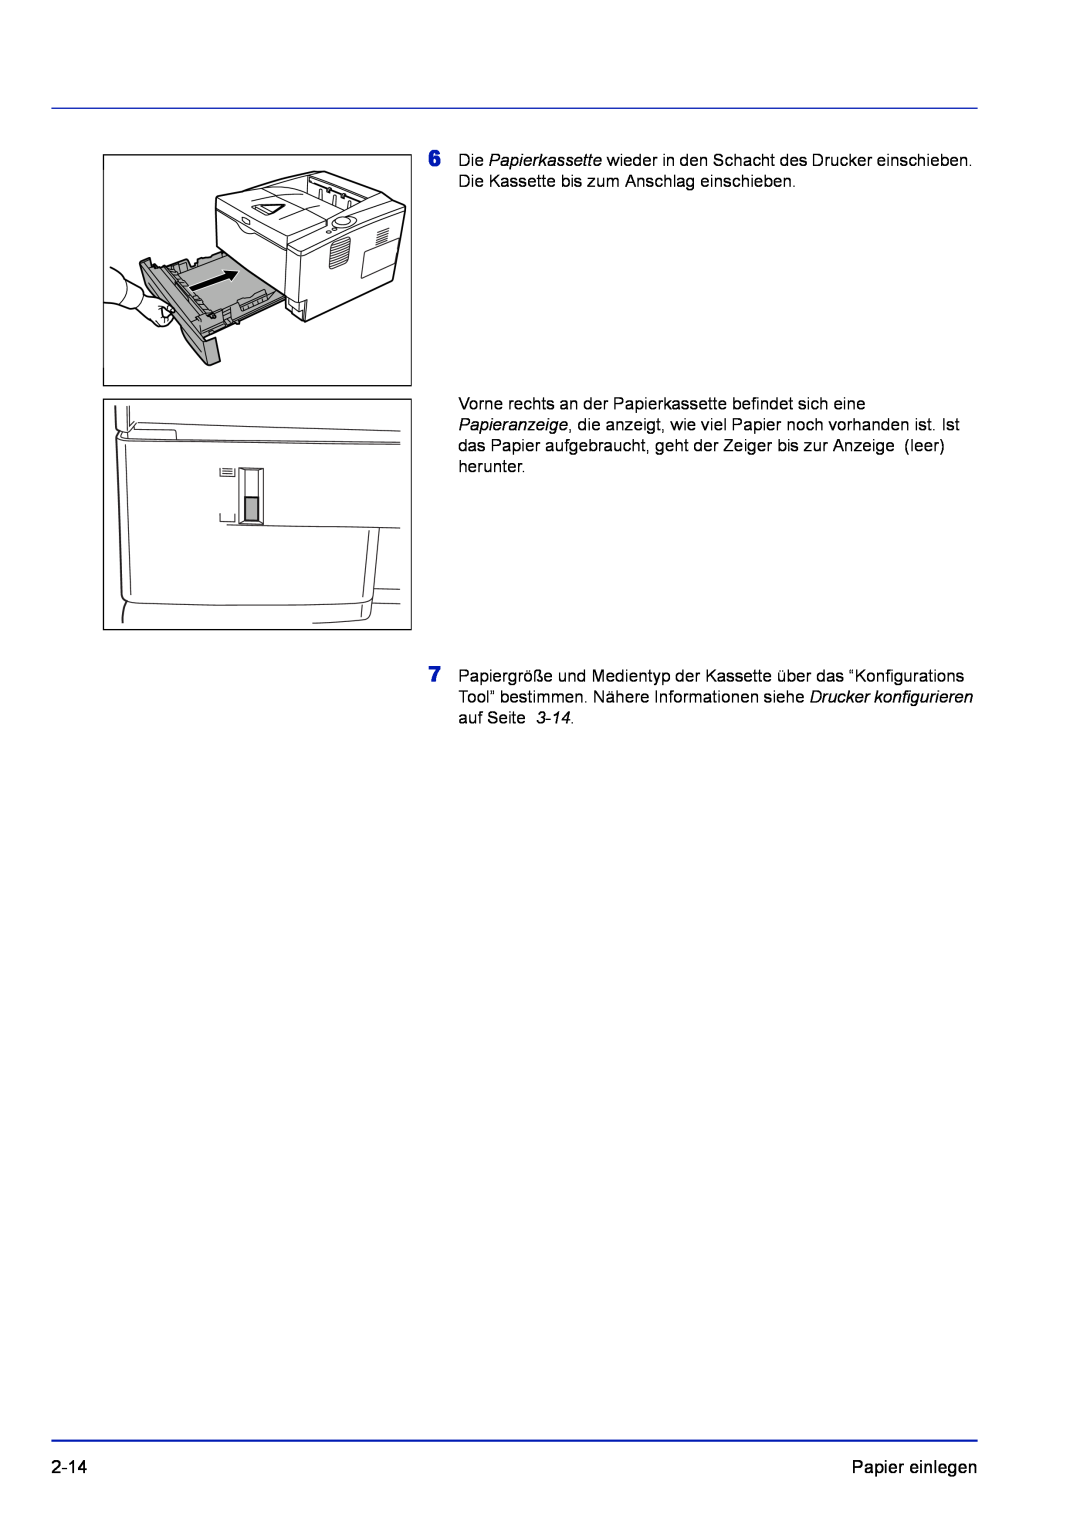 Kyocera FS-1120D, FS-1320D manual 2-14, Papier einlegen 